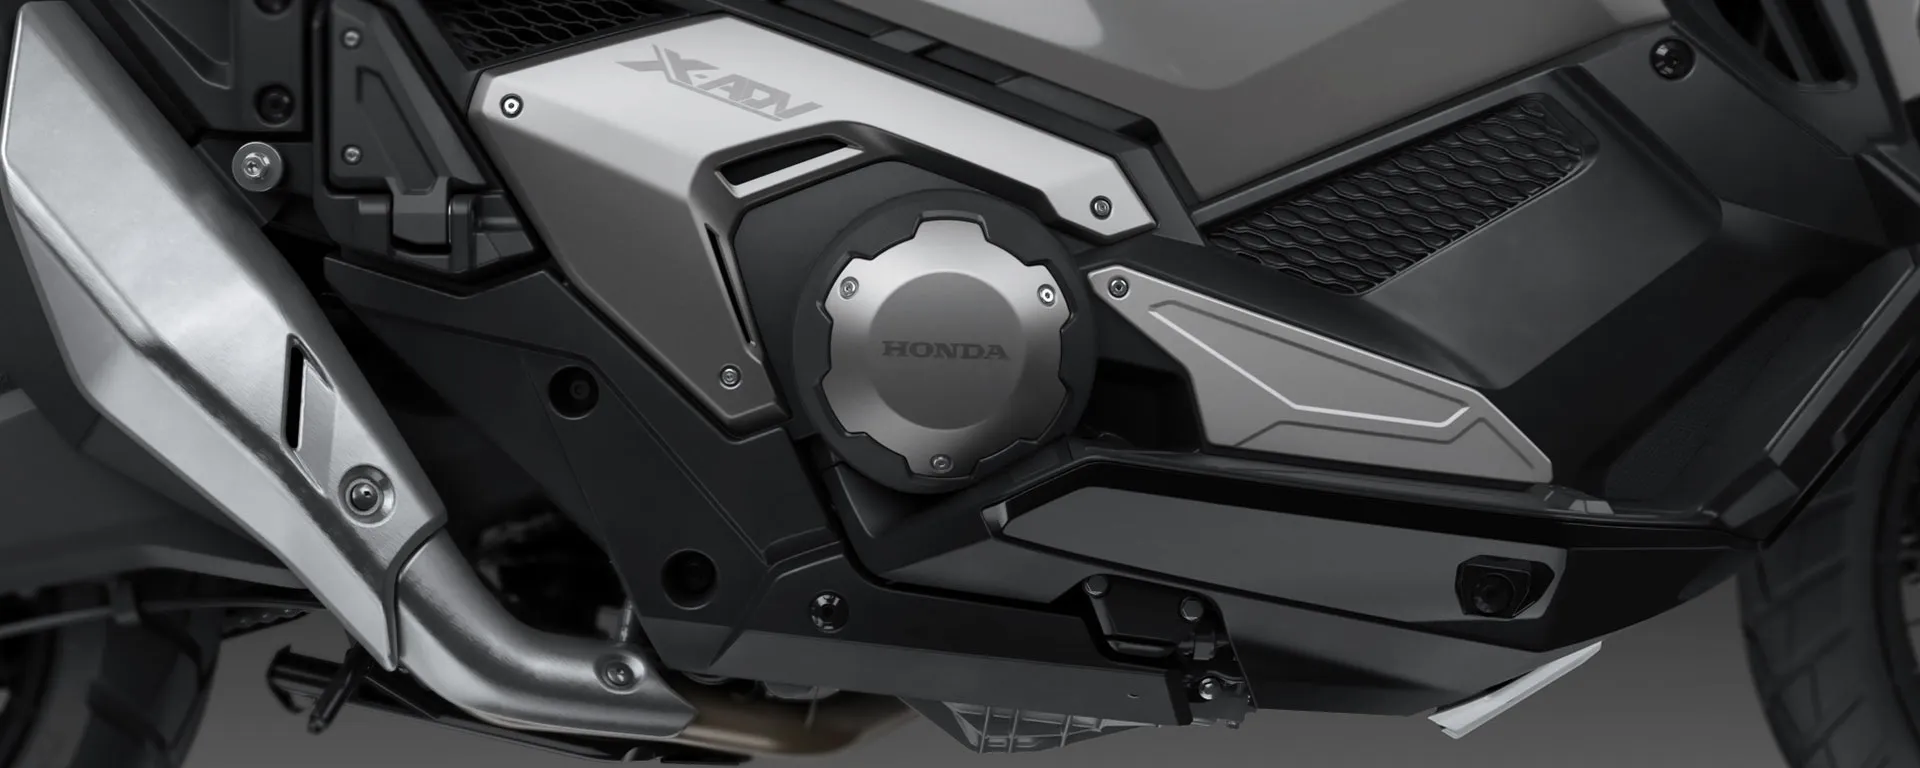 Motor bicilíndrico da Moto Honda X-ADV 